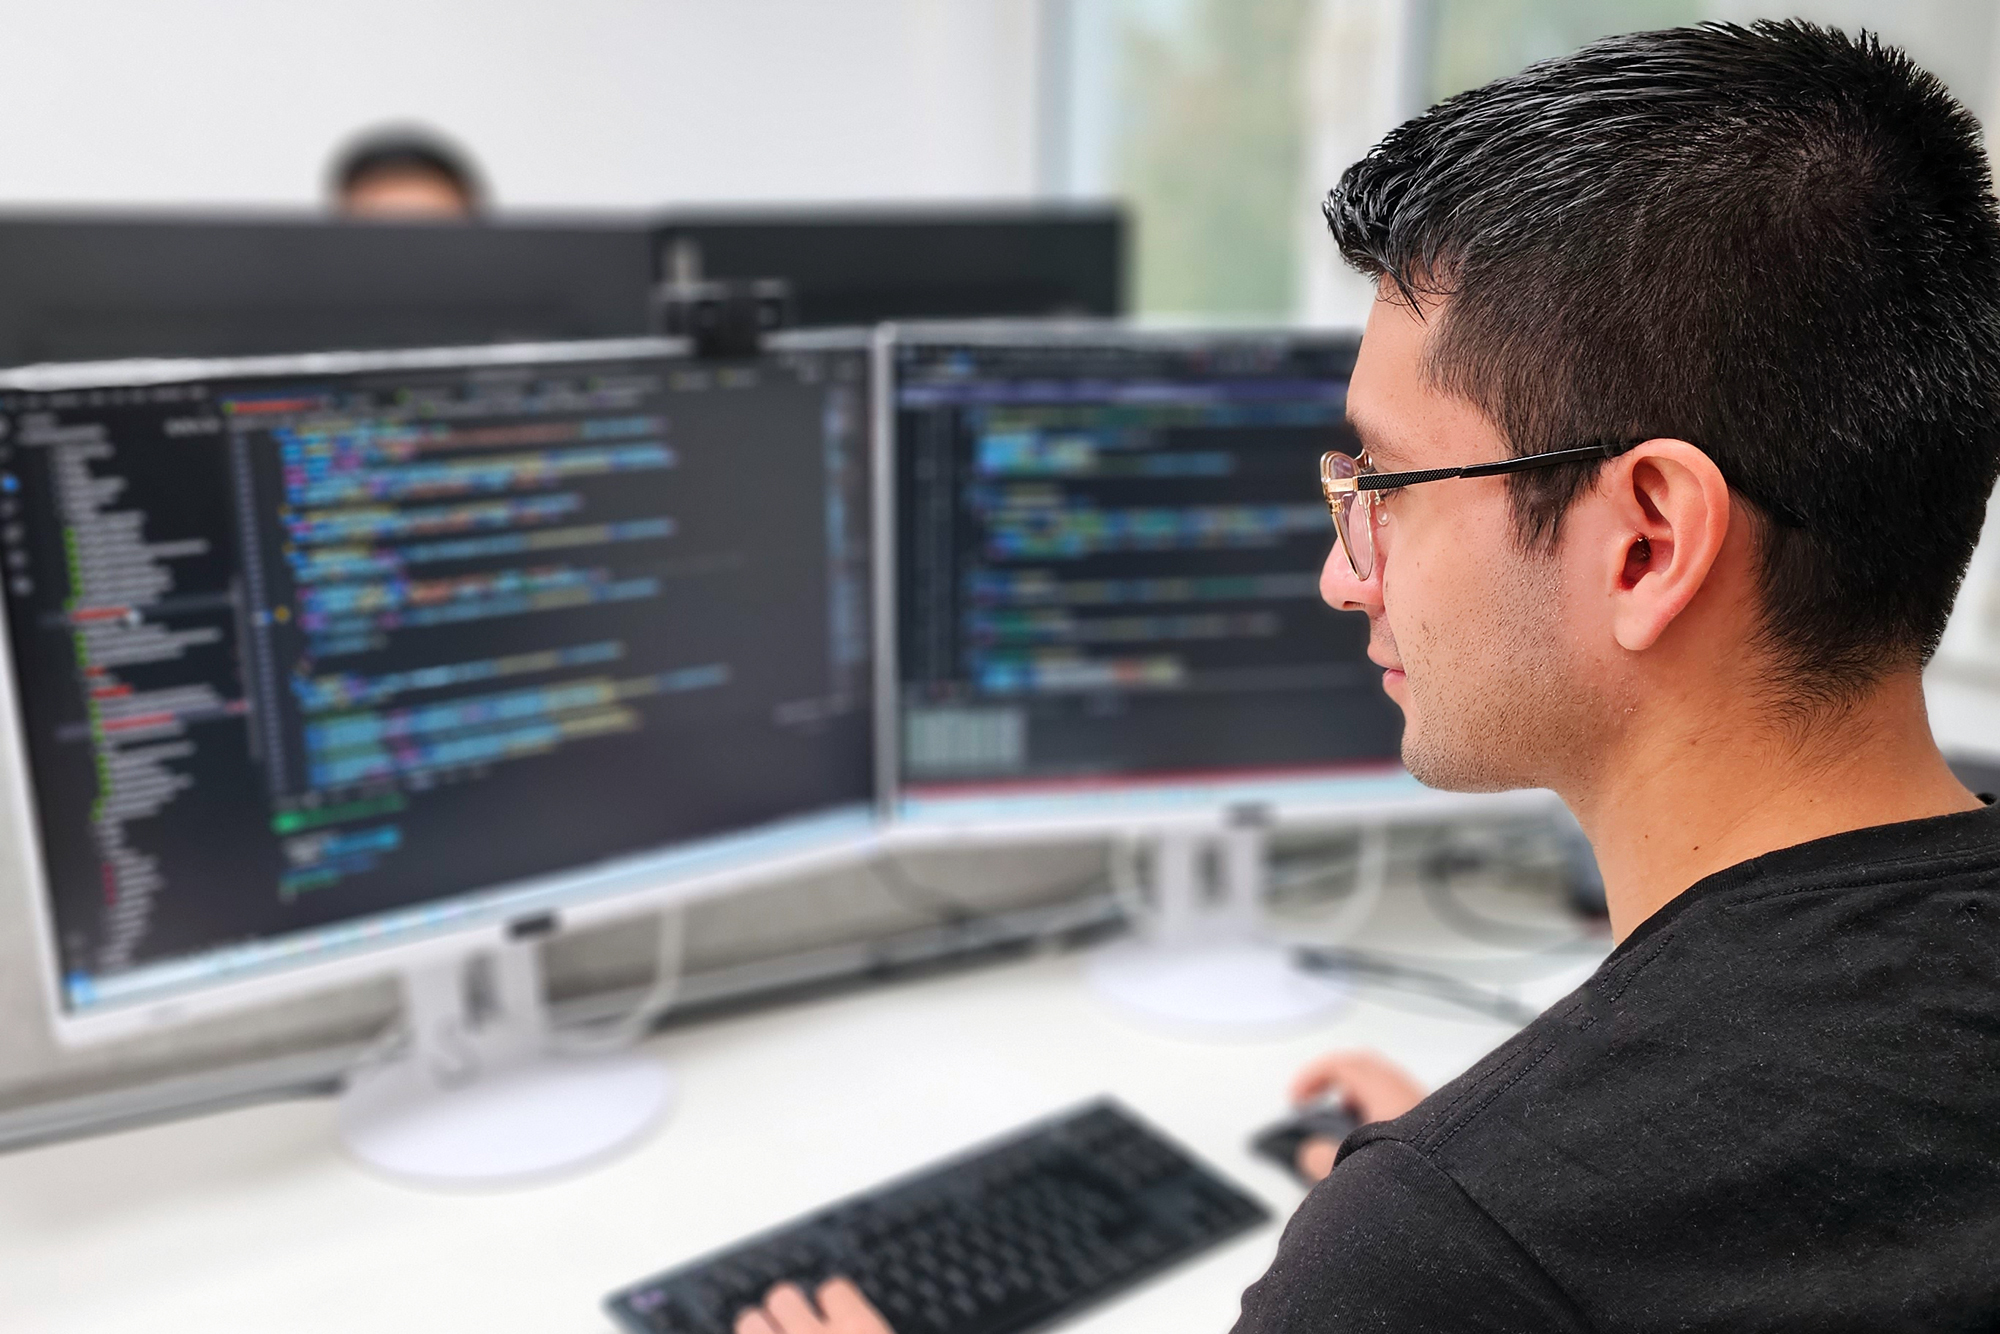 Bild: Softwareentwicklung. Ein junger dunkelhaariger Mann programmiert an einem Computer.